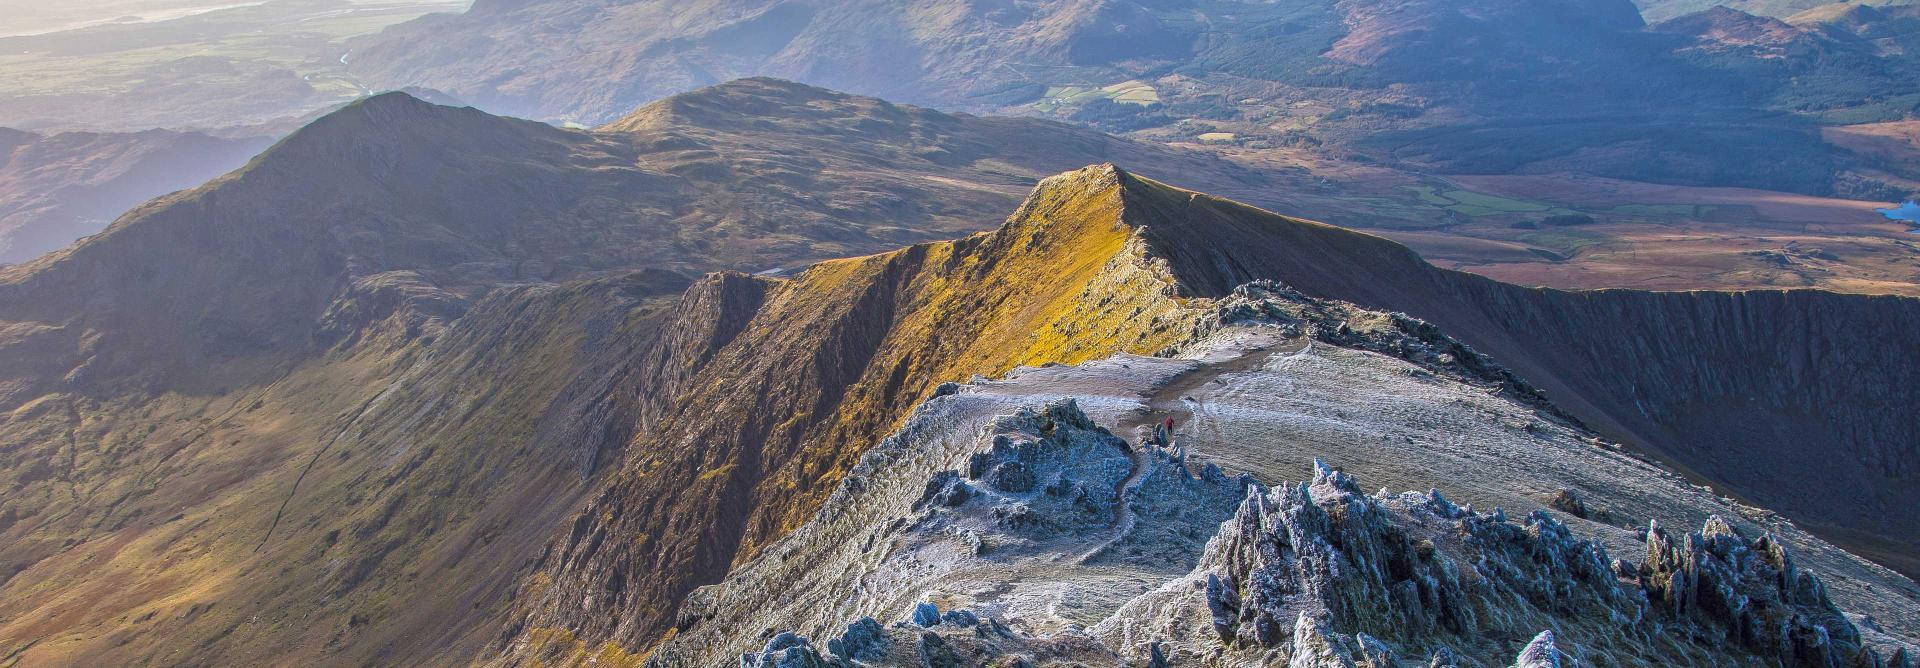 Three Peak Mountain Logo - National Three Peaks Challenge: Mountain Trek challenge to UK